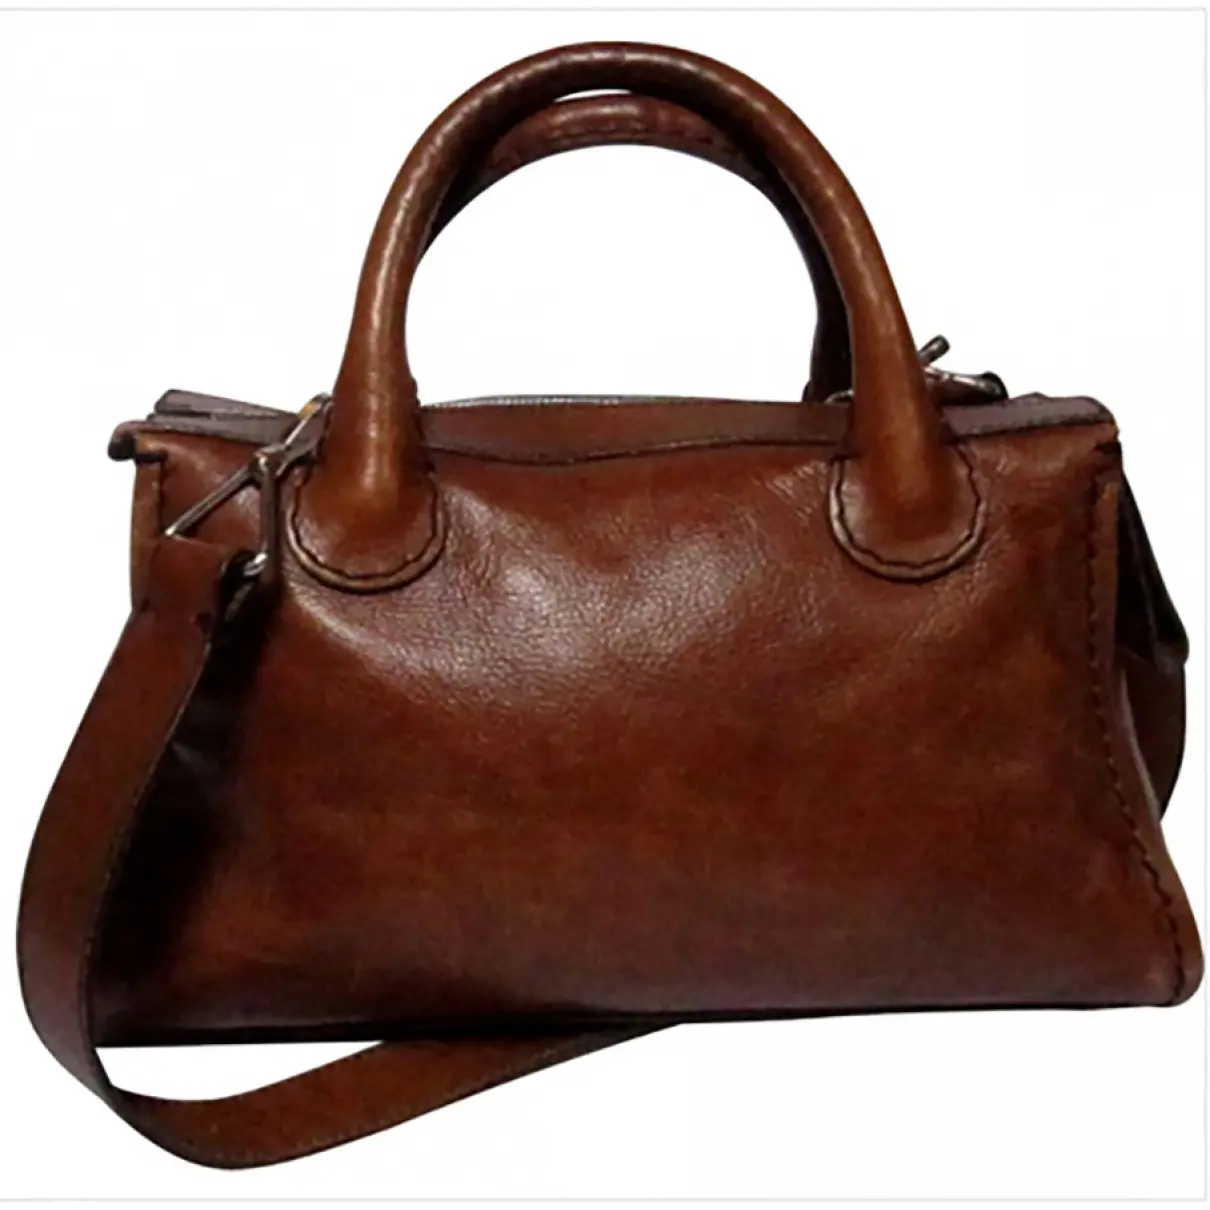 Chloé Edith patent leather handbag for sale